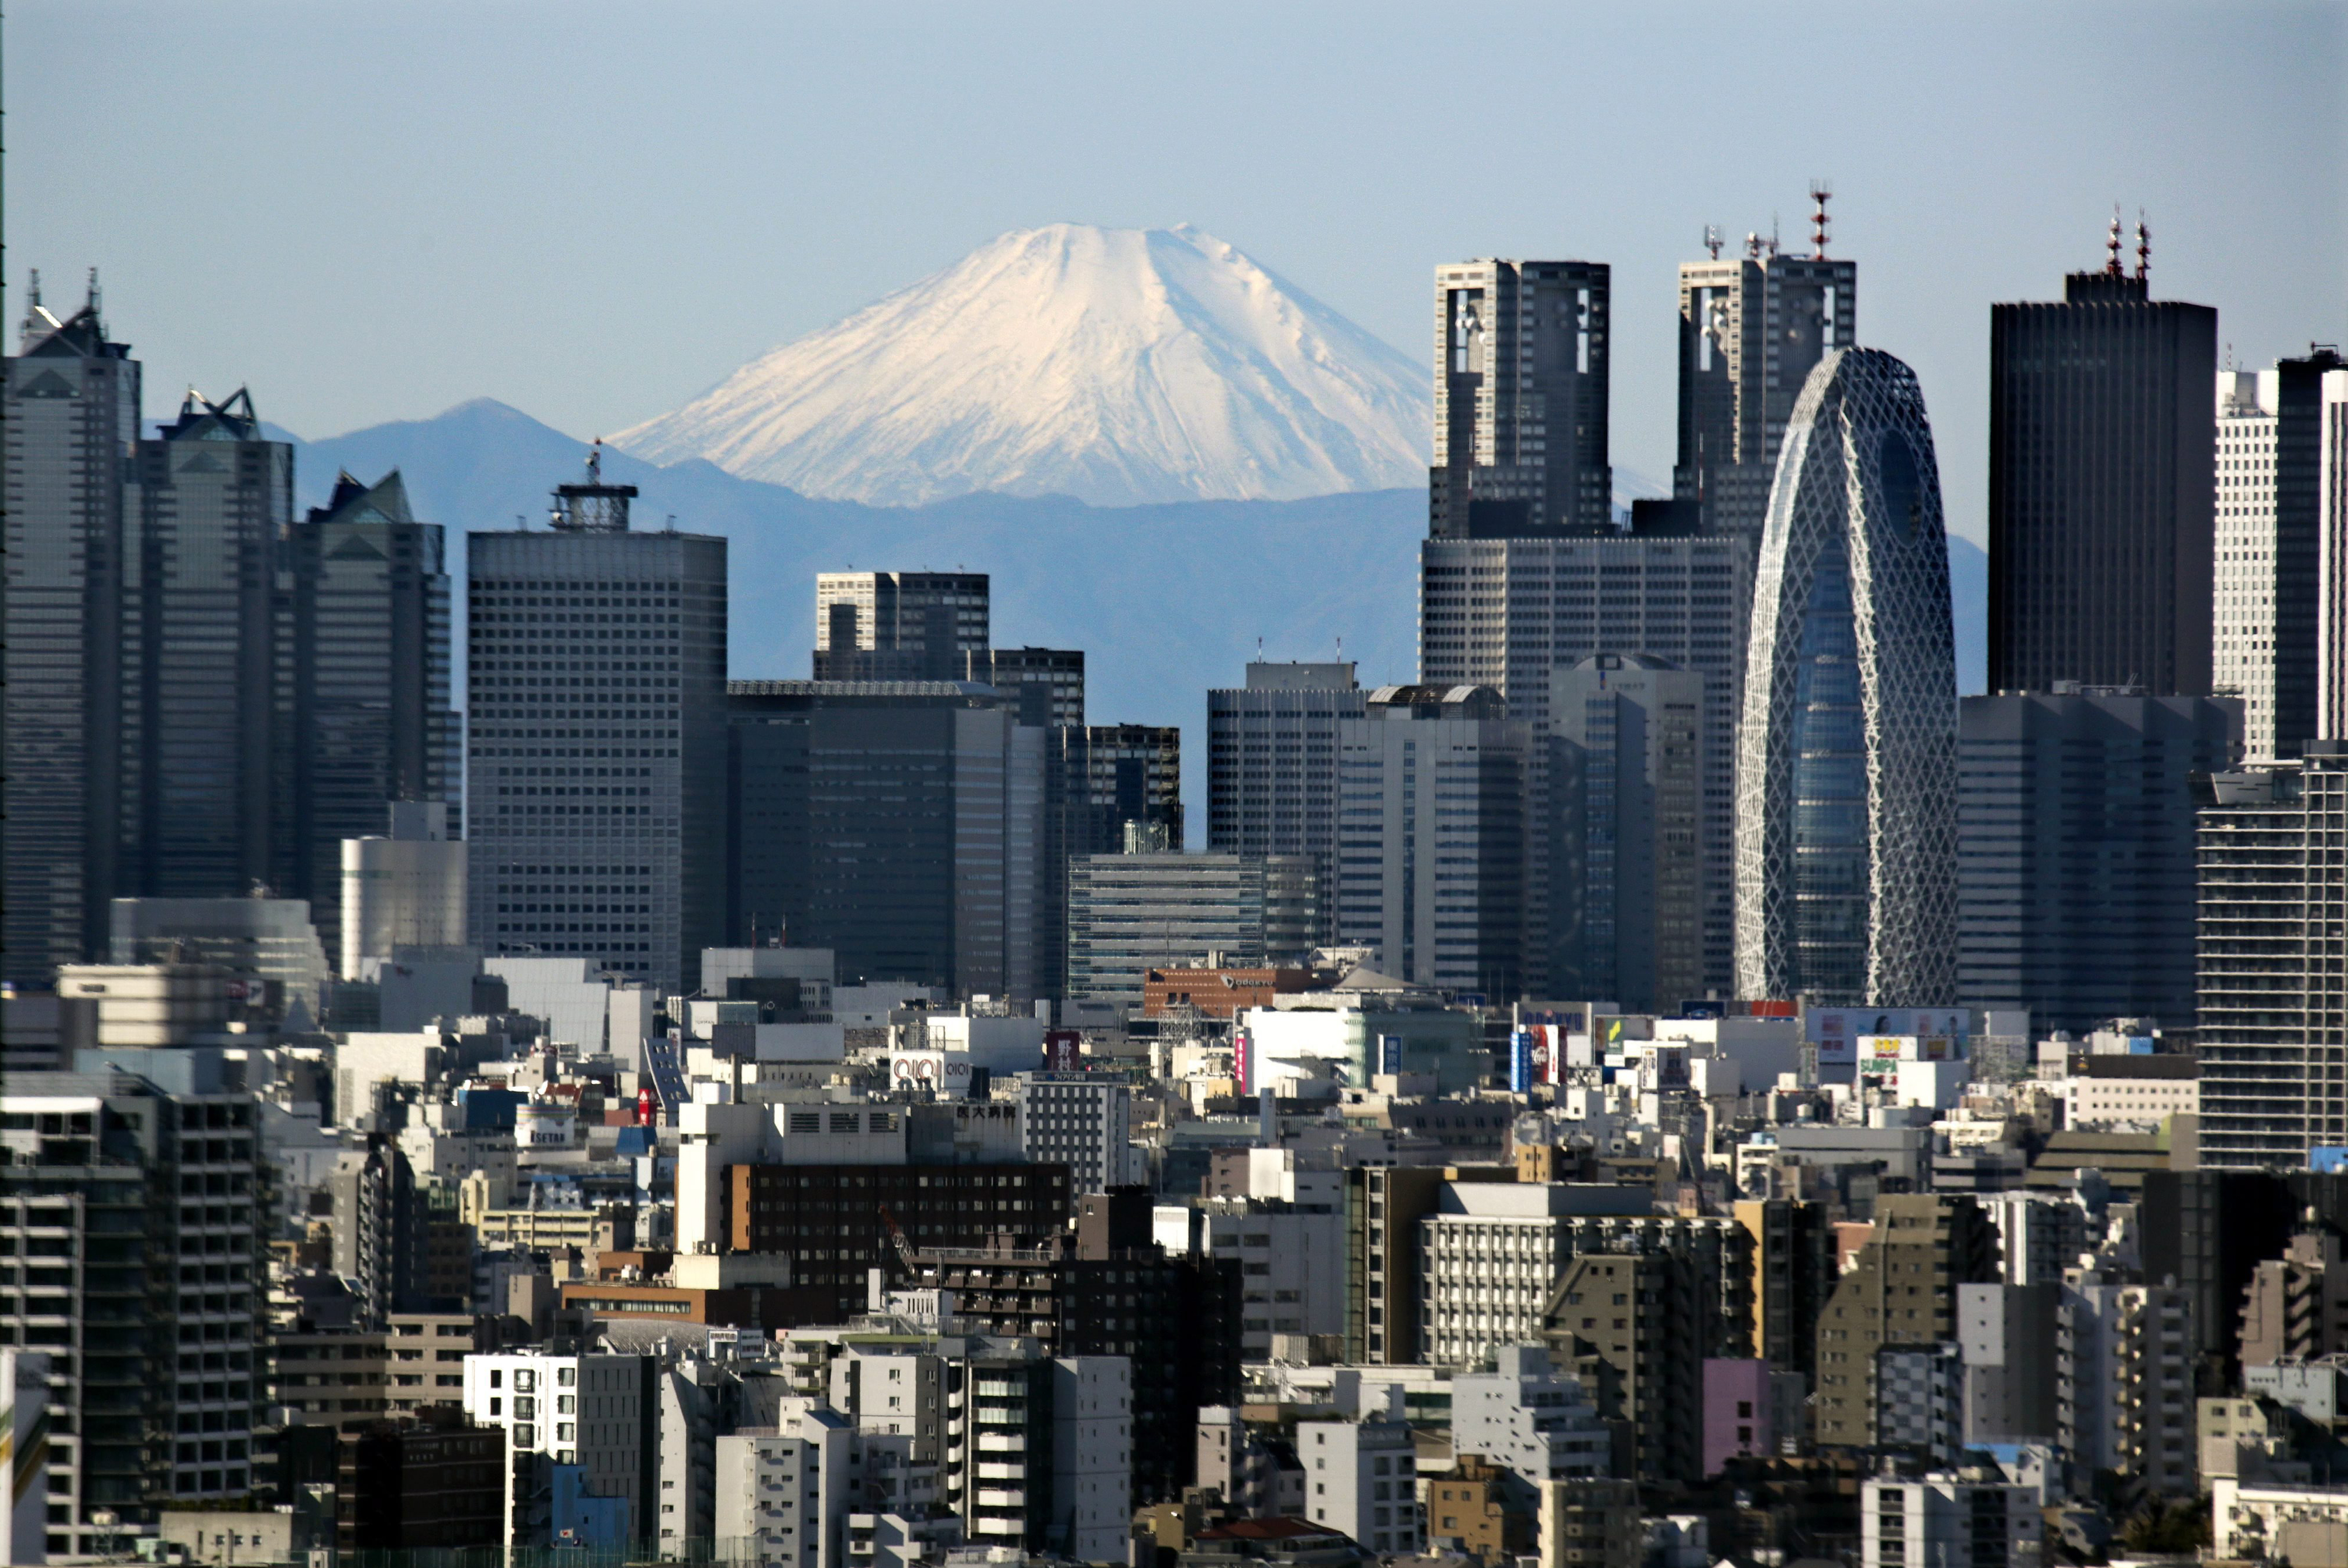 Japan's highest peak of Mt. Fuji and Shinjuku skyscrapers in central Tokyo, on Dec. 16, 2013. (Kimimasa Mayama—EPA)